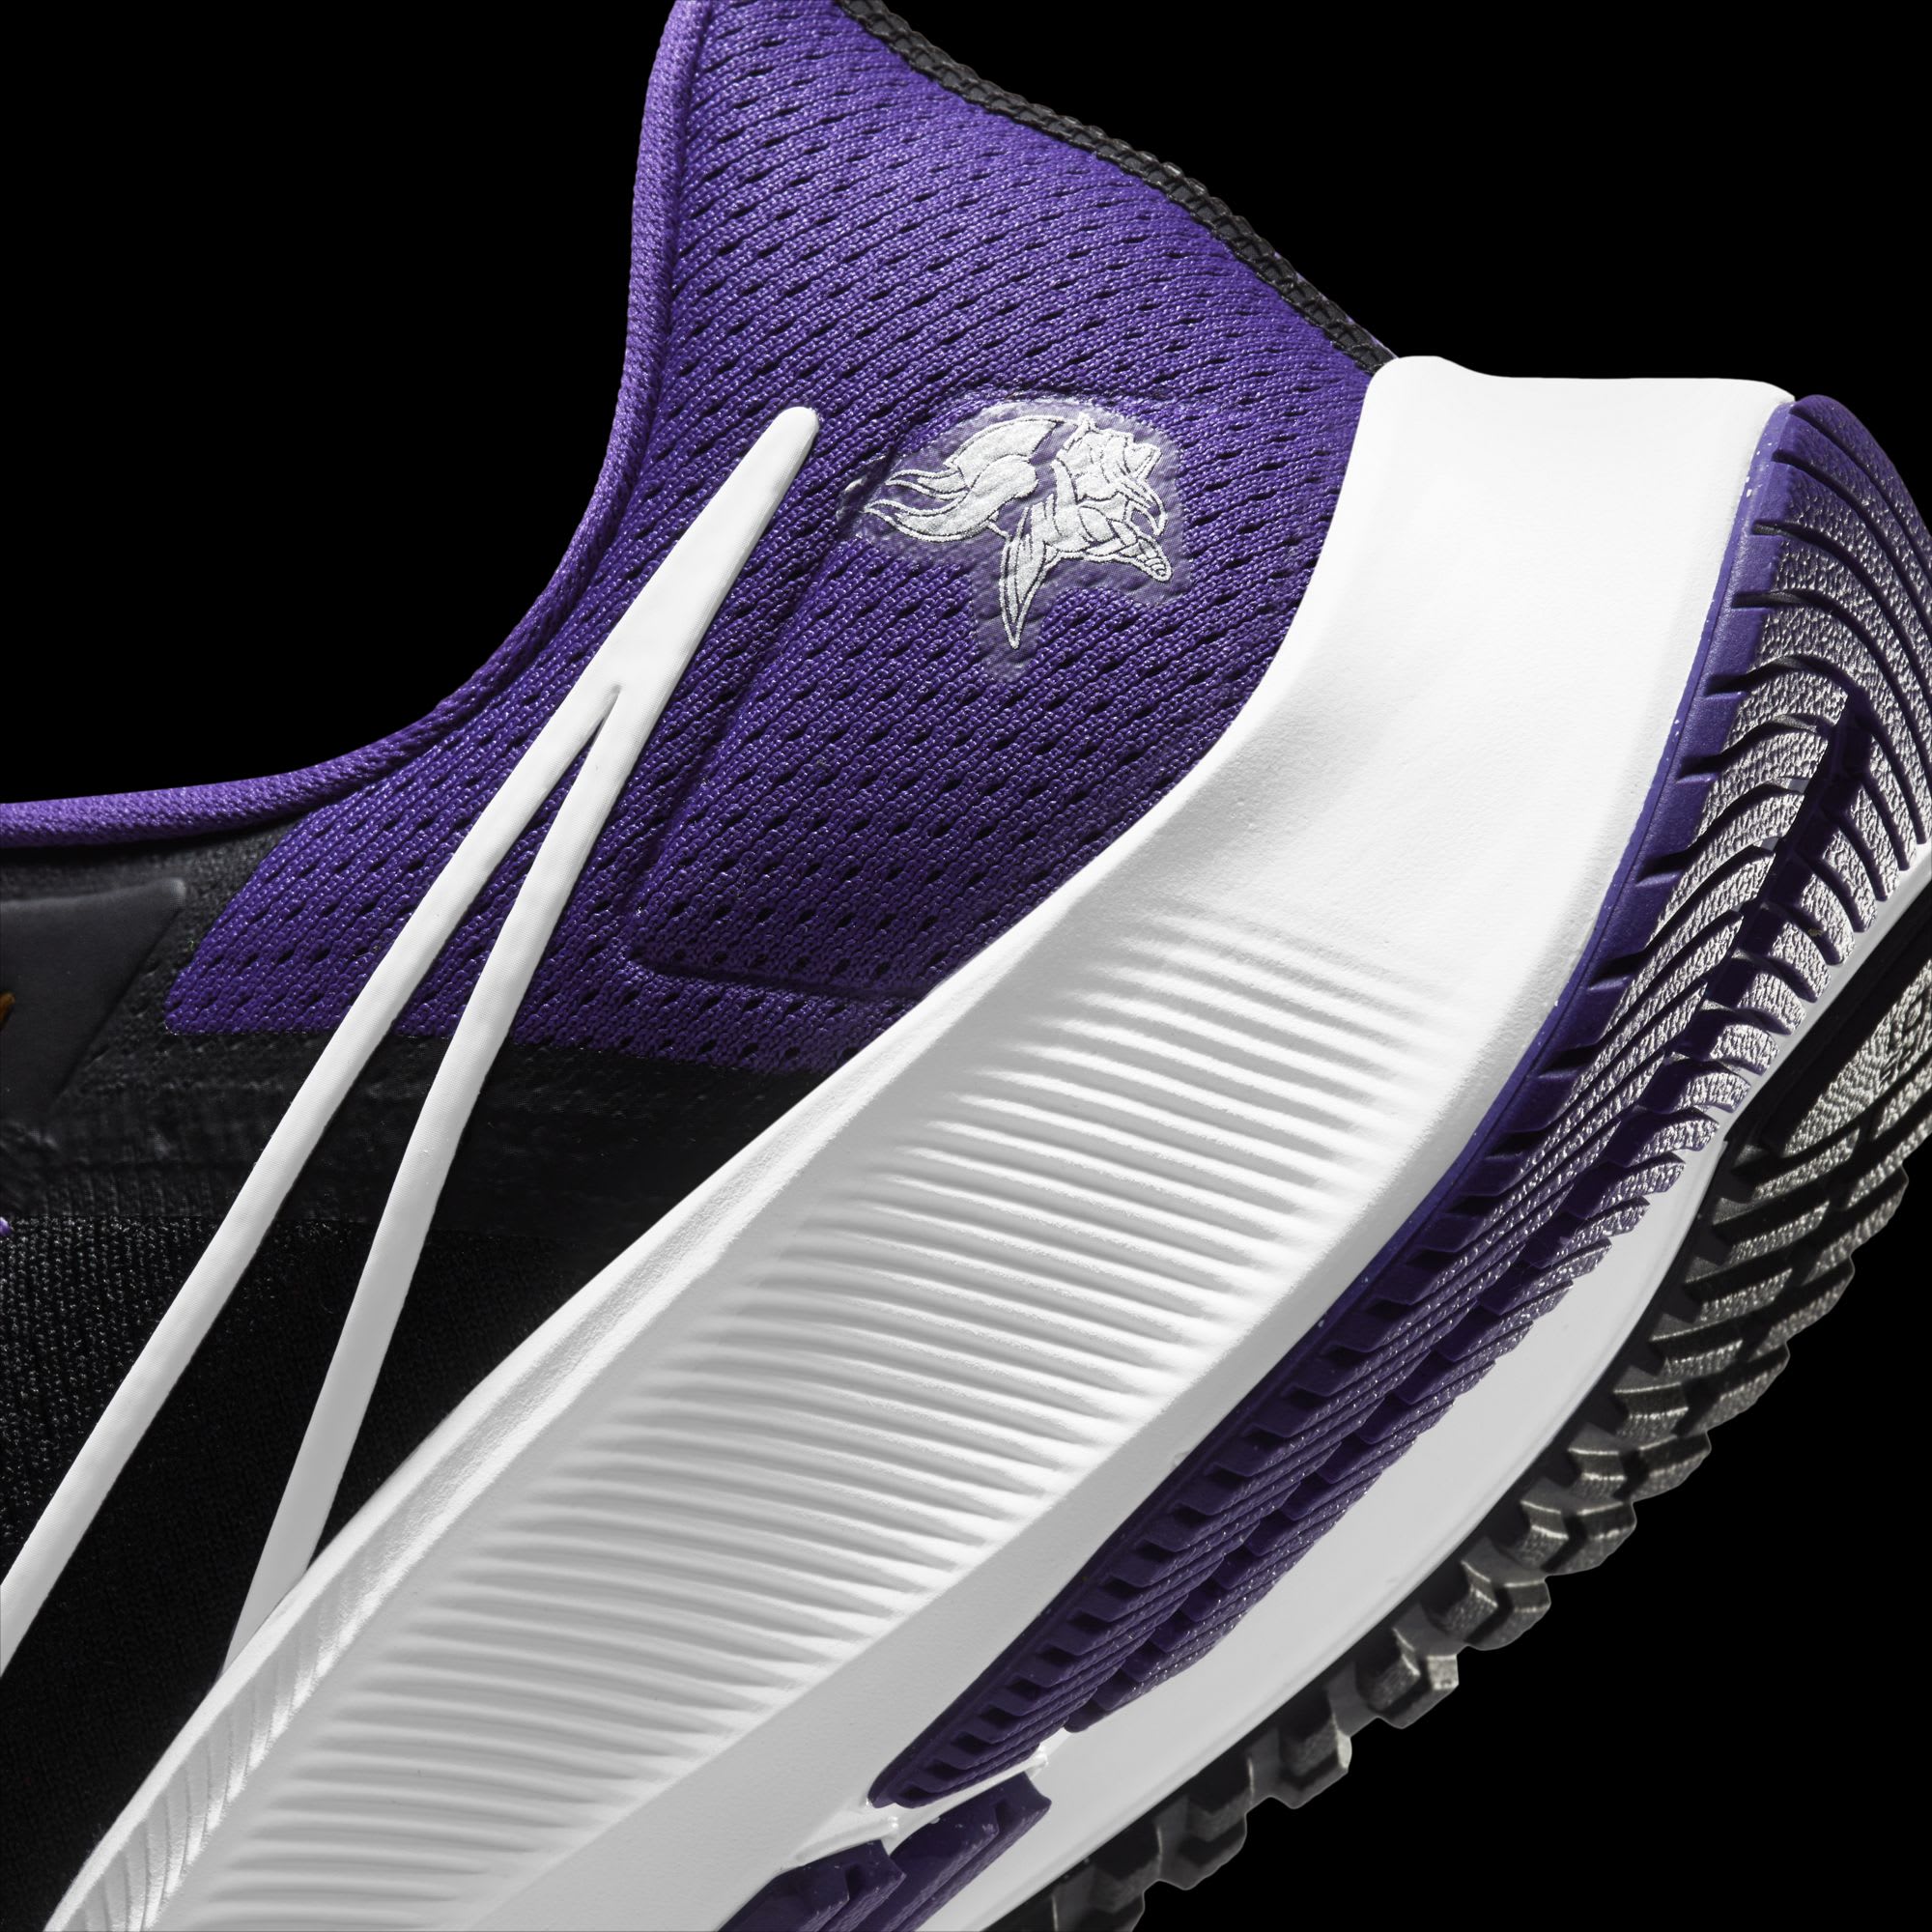 sí mismo al menos Muscular Order your Minnesota Vikings Nike Air Zoom shoes today